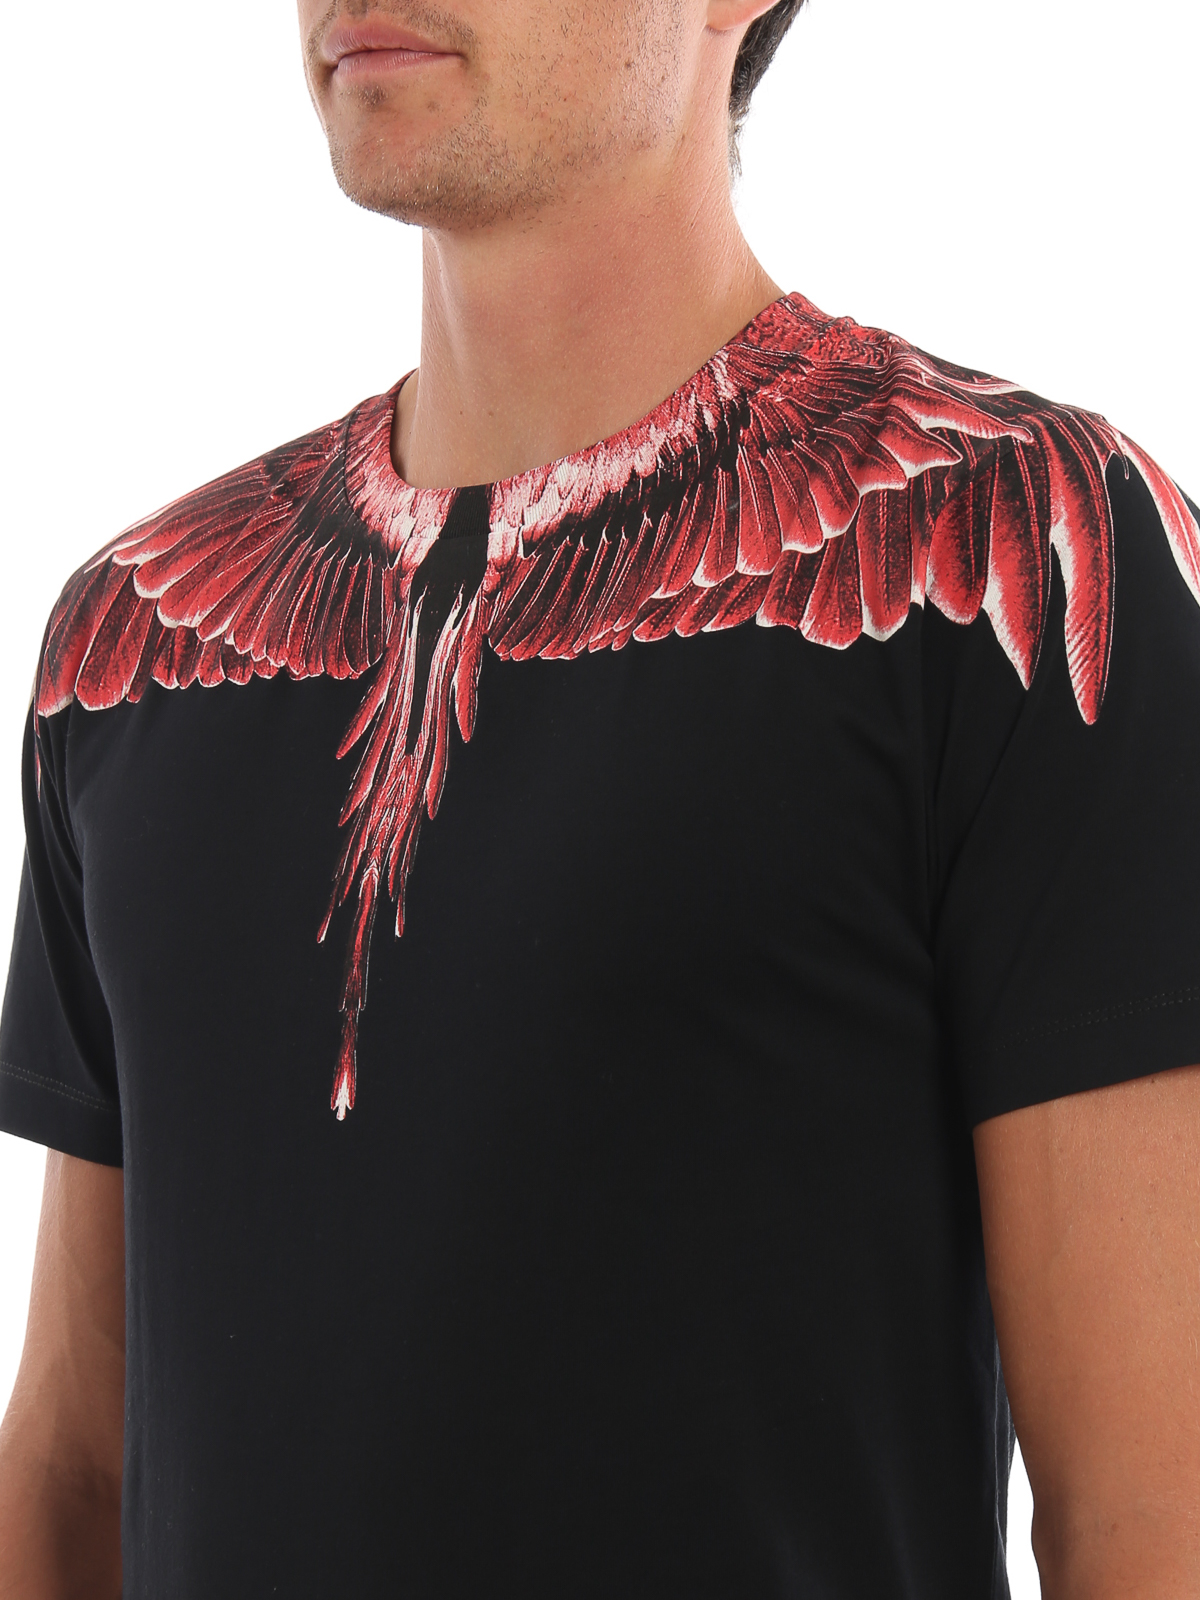 mavepine Betjening mulig guitar T-shirts Marcelo Burlon - Red Ghost Wings black T-shirt -  CMAA018E190010031088